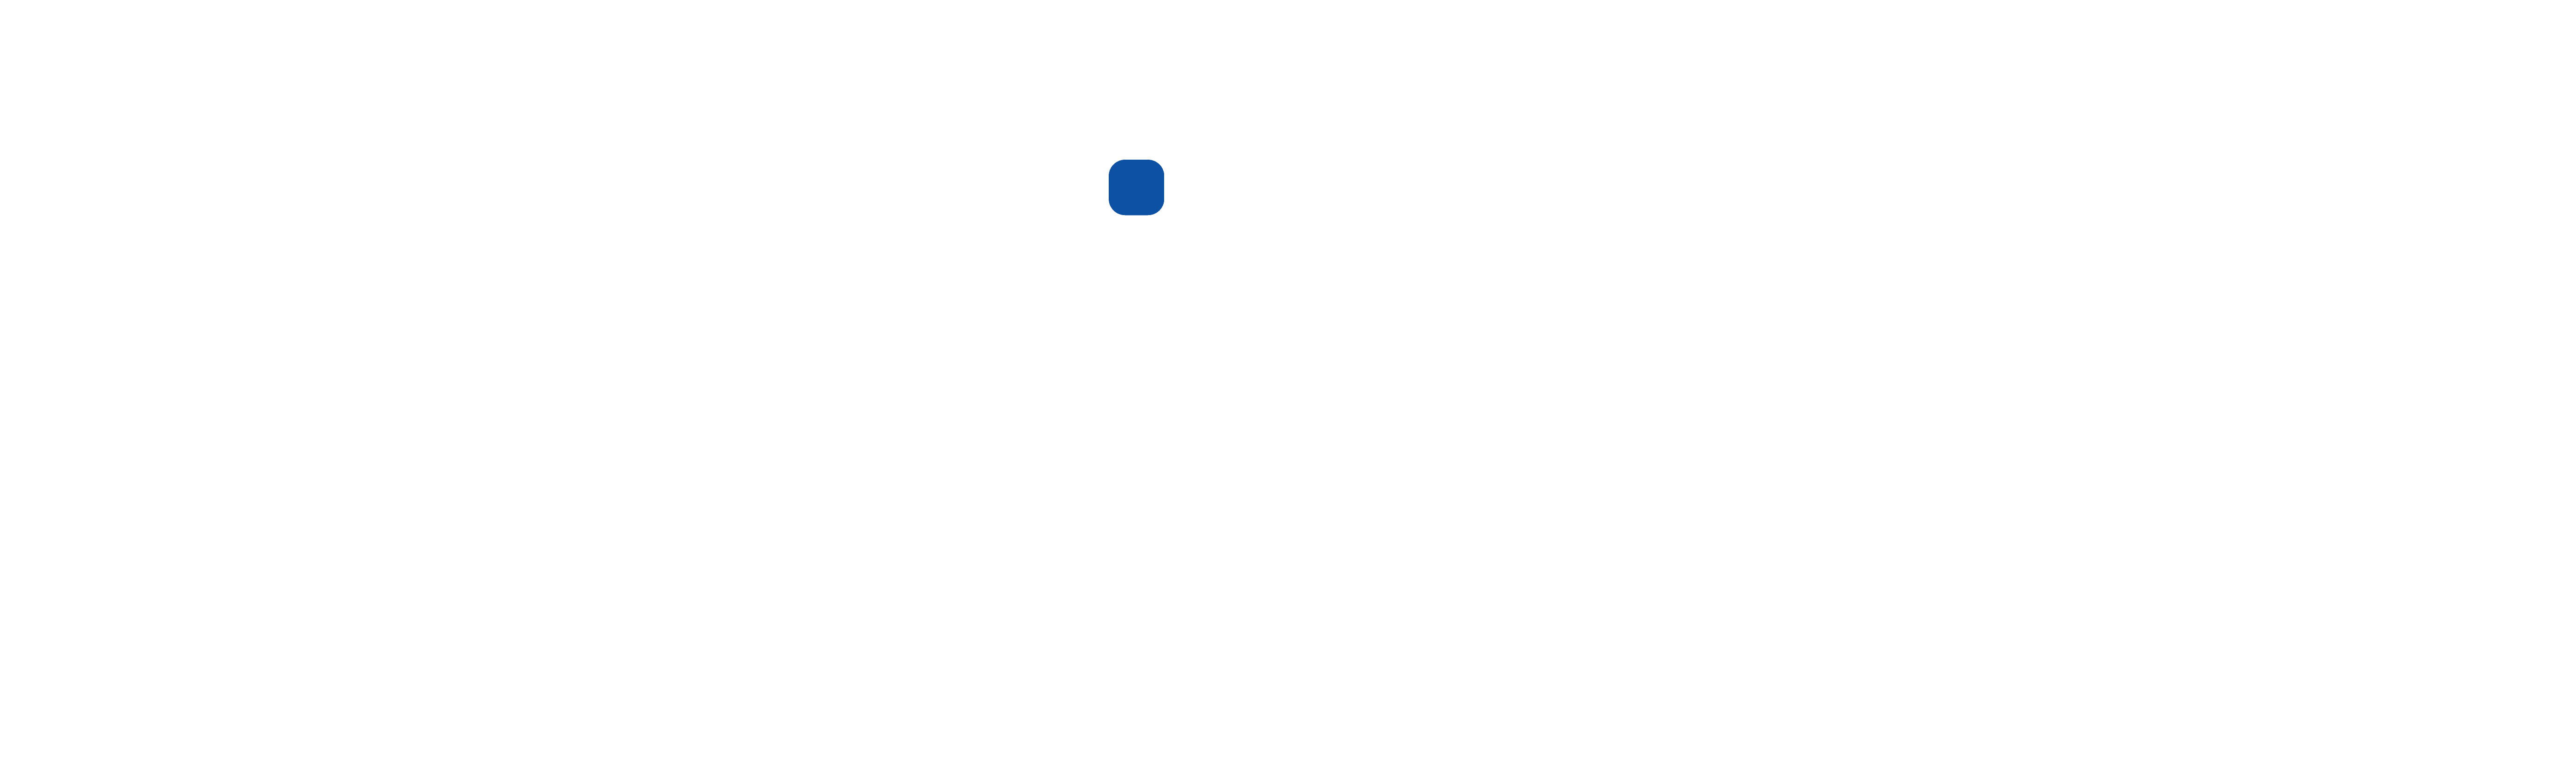 logo IQX Transparent (4) [Recovered]_full logo white